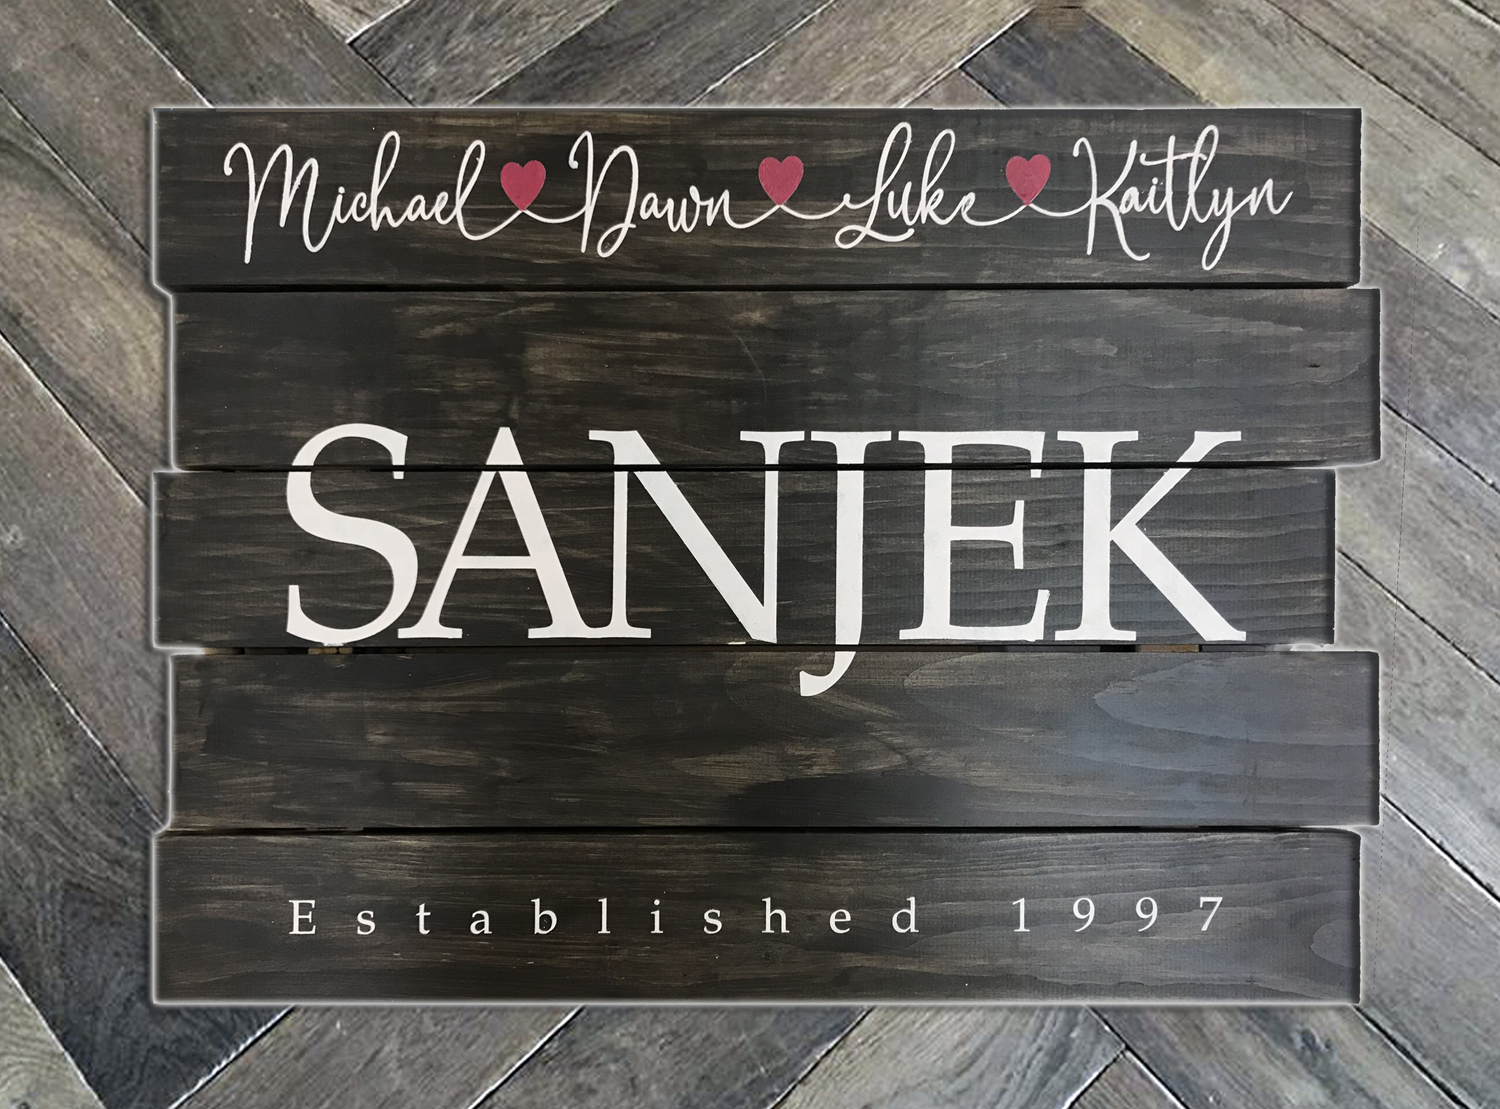 Sanjek with names 